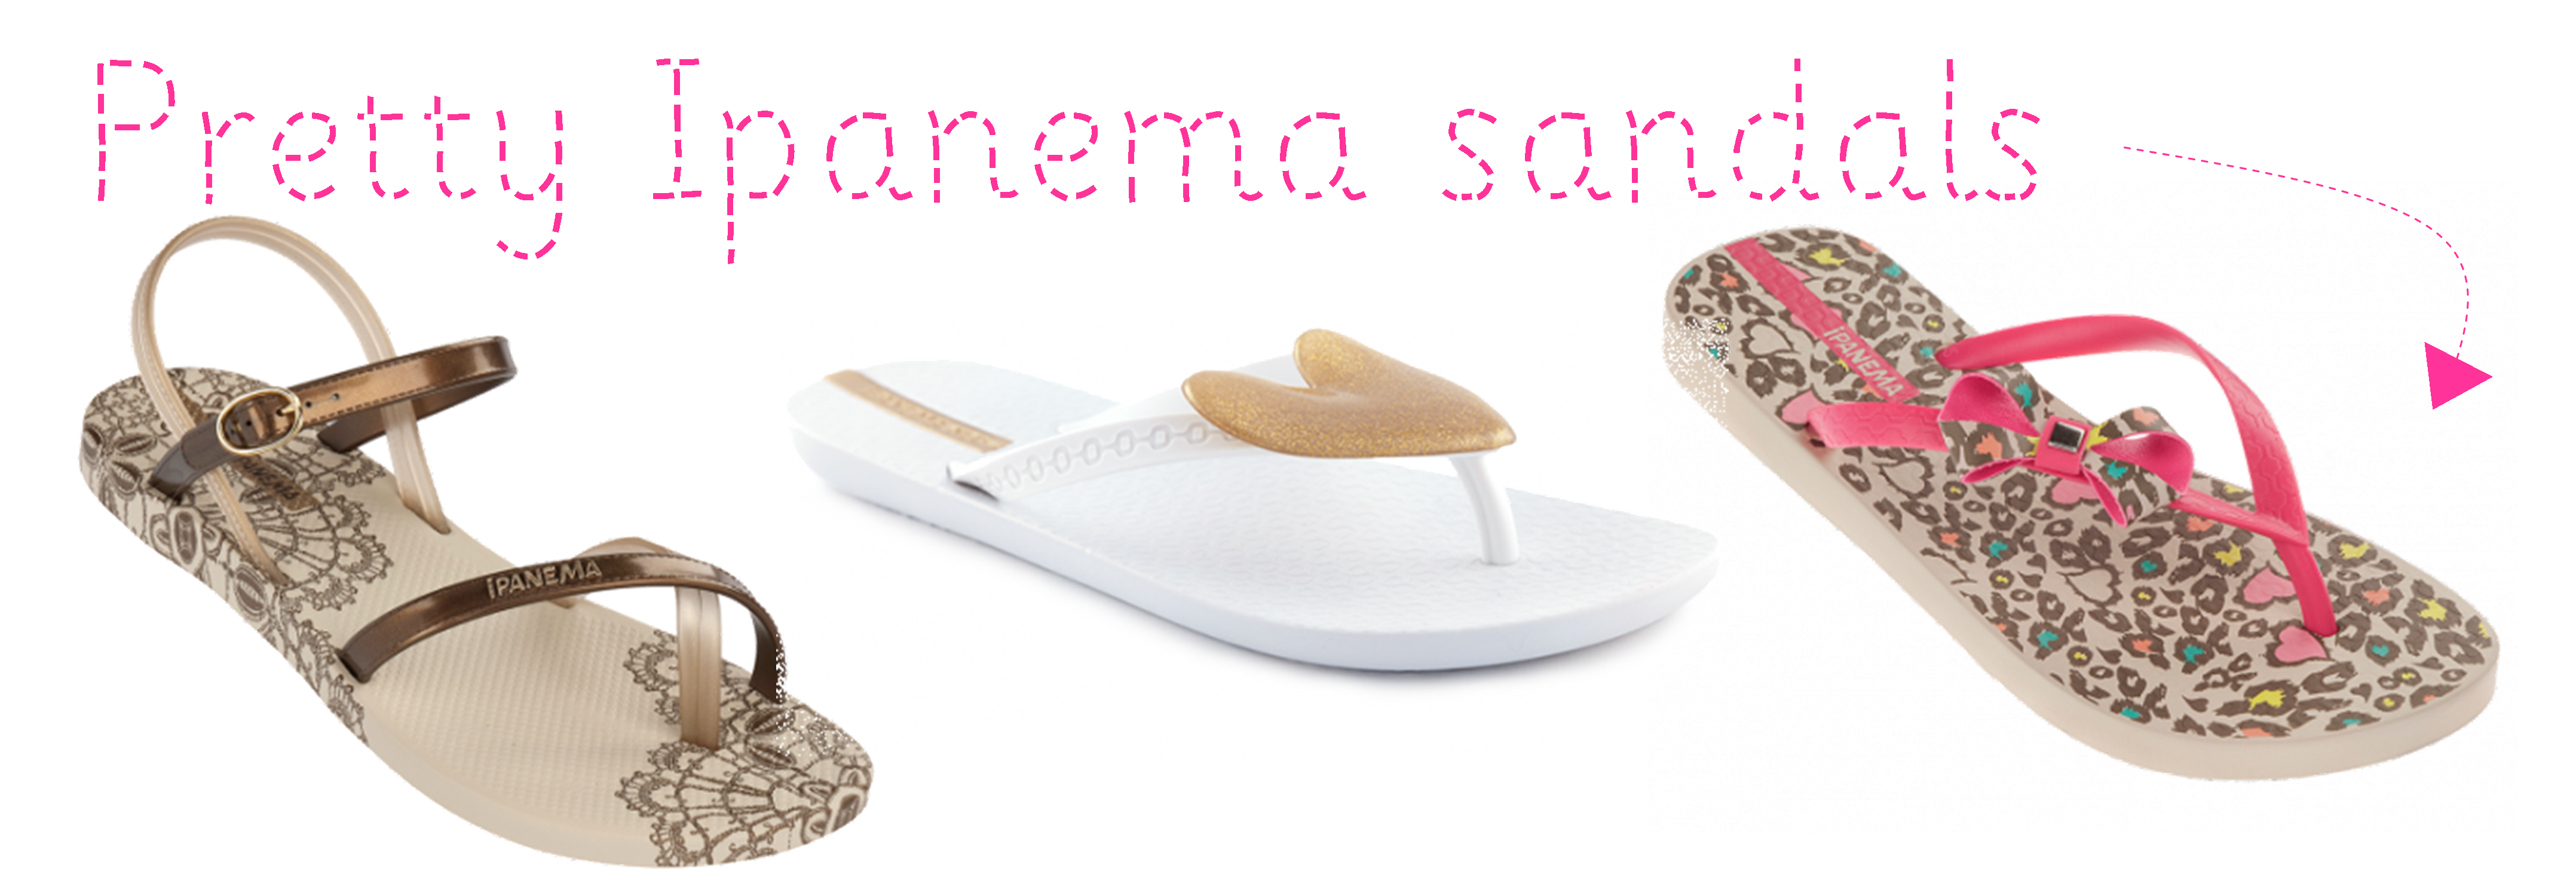 summer flip flops ipanema sandals from jamhill